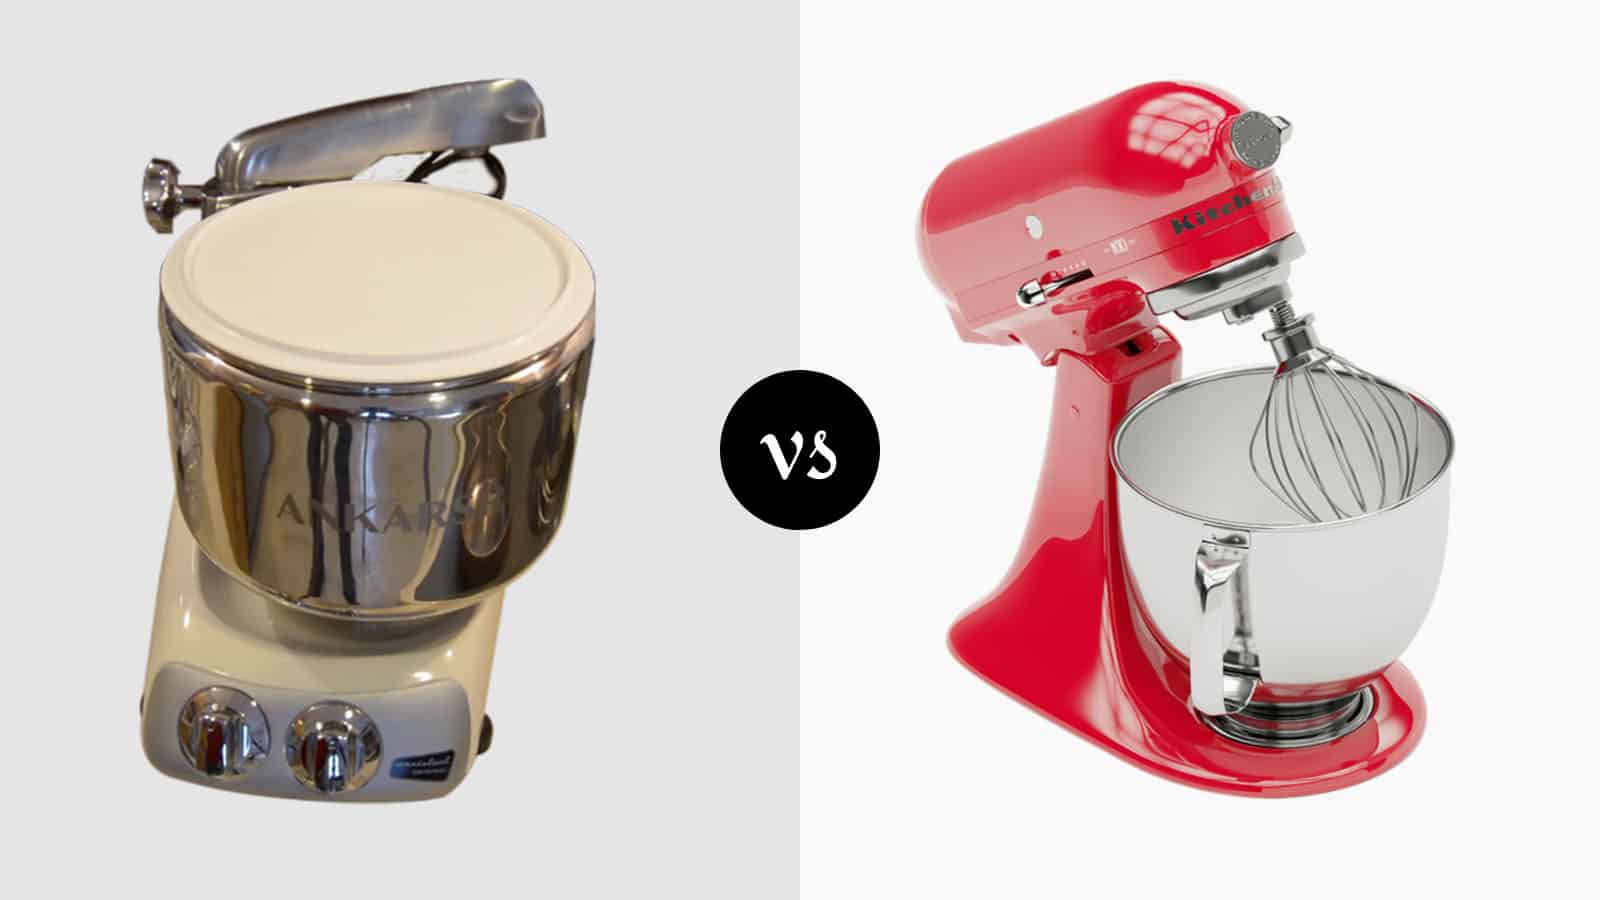 Ankarsrum vs KitchenAid: Which One Is Better?